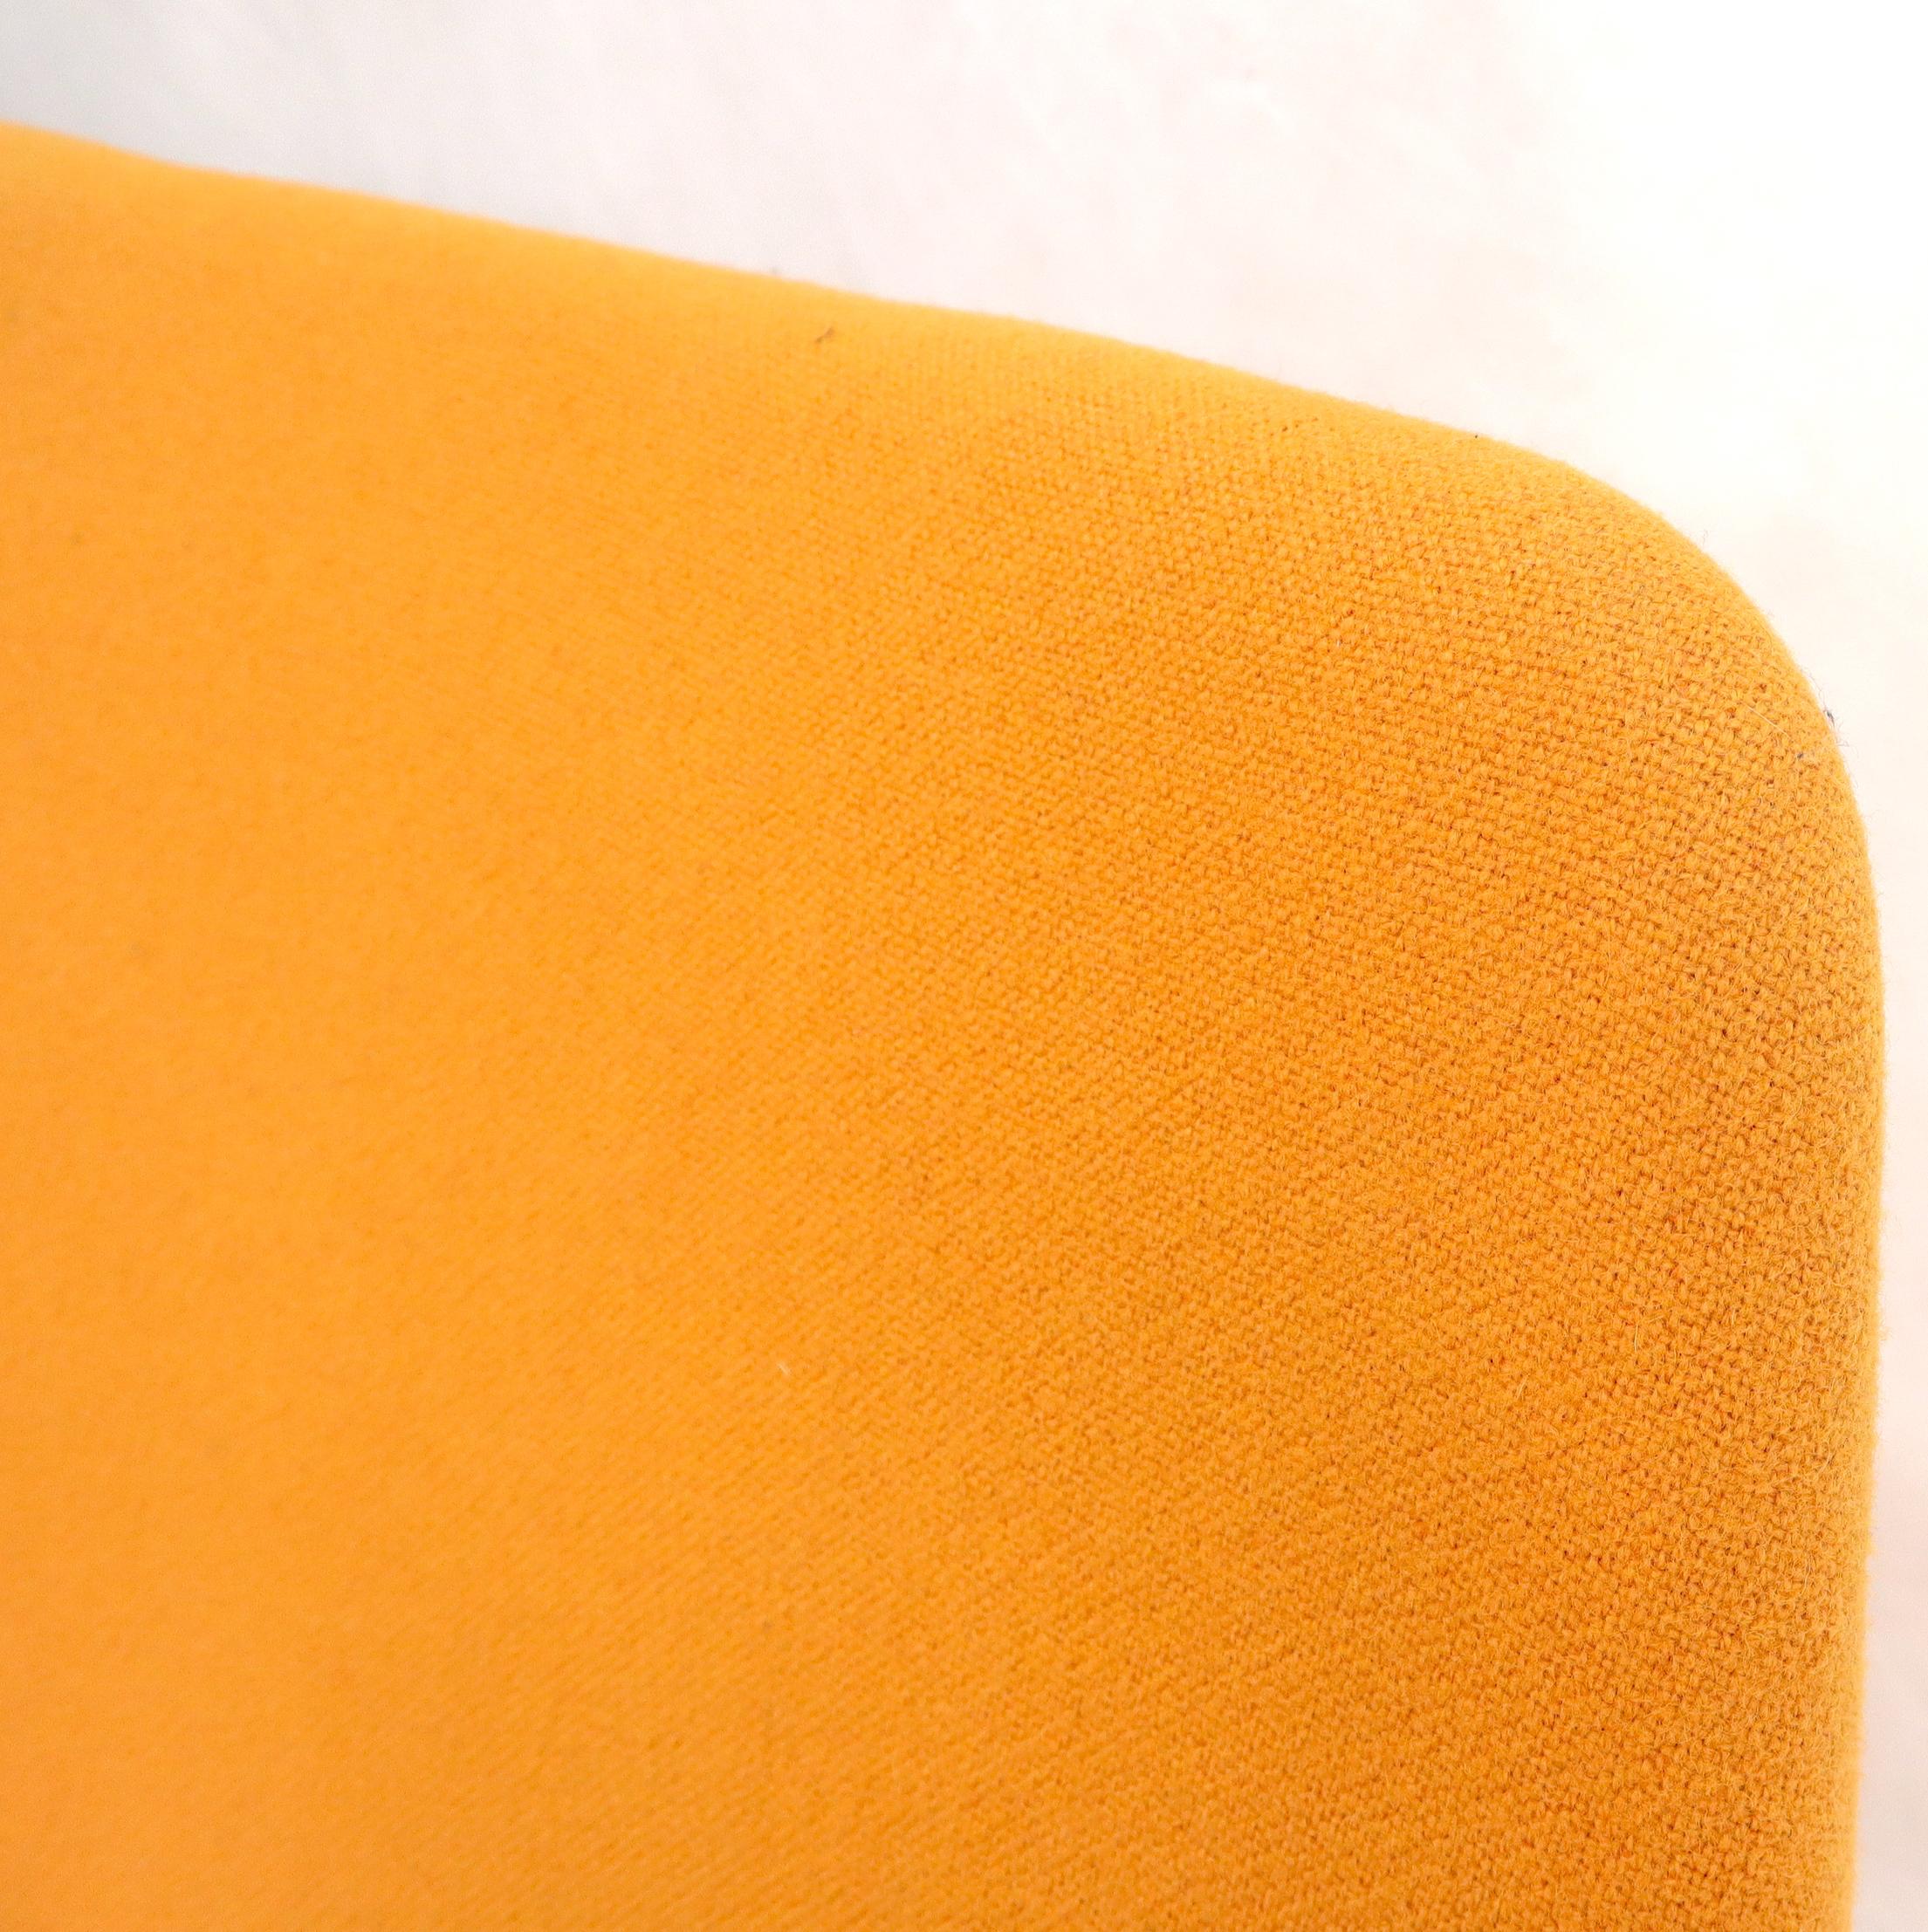 Pierre Paulin Artifort Wool Upholstery Oyster Chair Orange Wool Upholstery For Sale 1